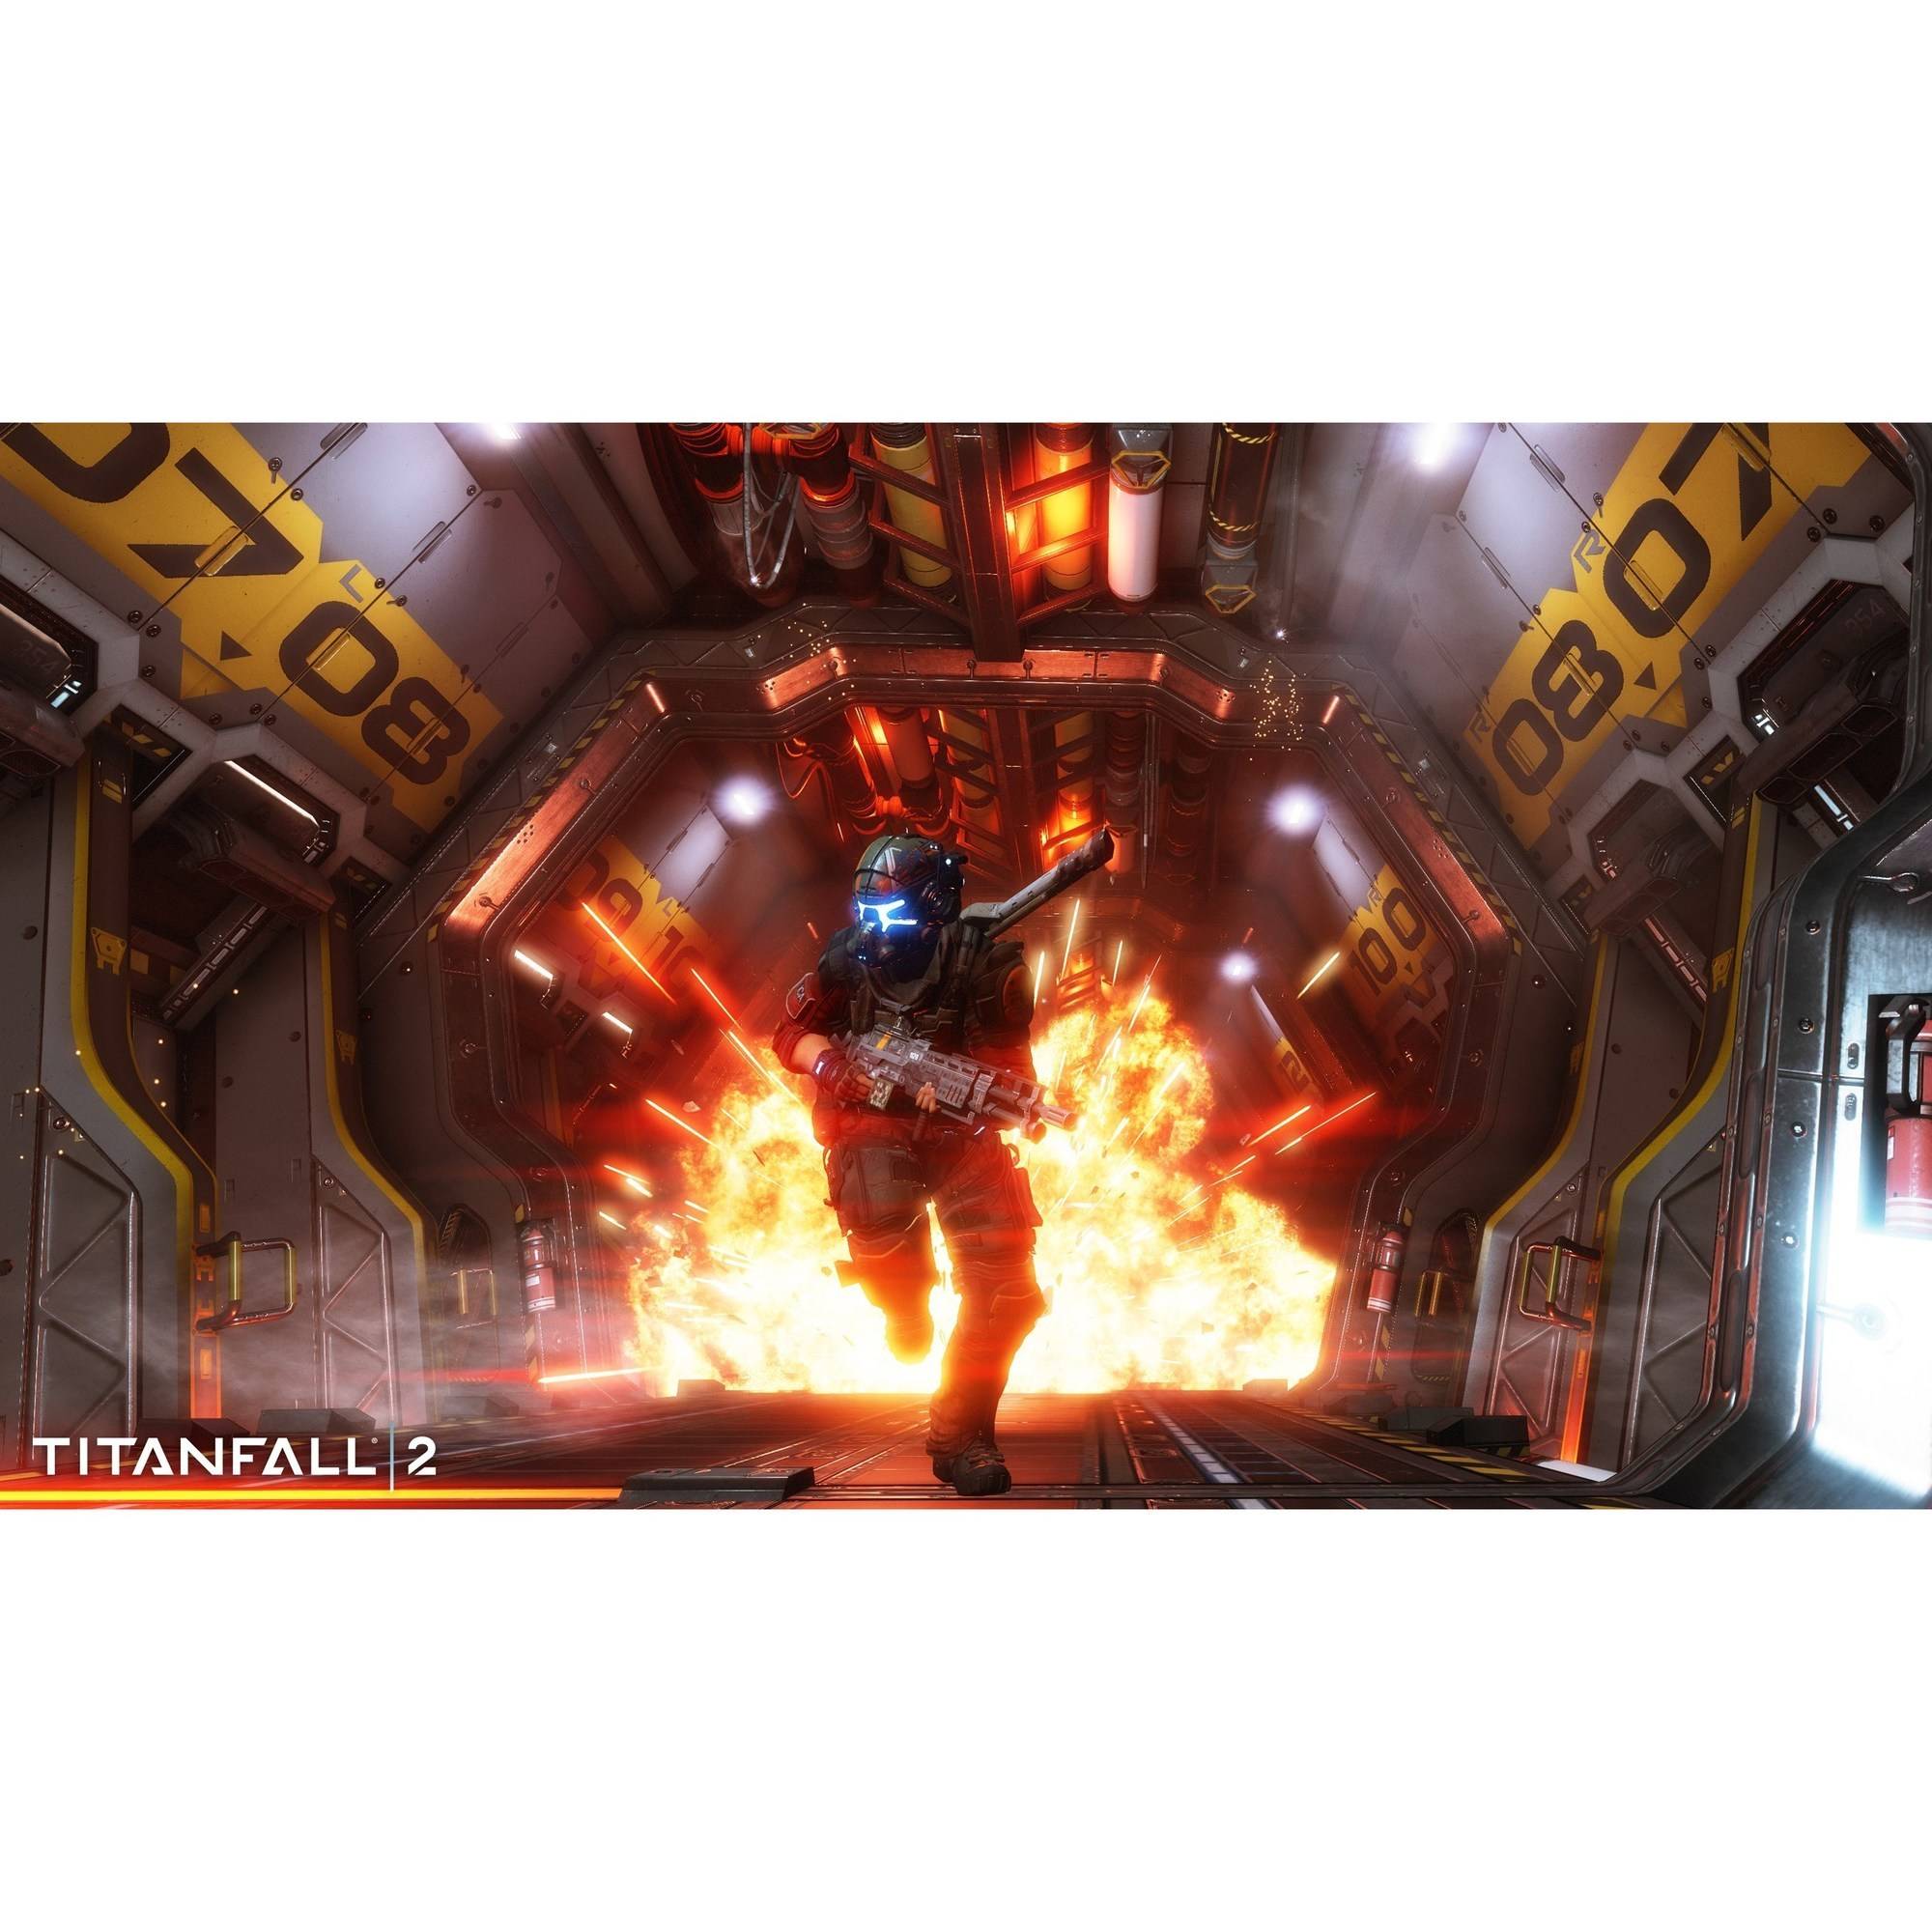 Titanfall 2, Electronic Arts, Xbox One, 014633368758 - image 6 of 8